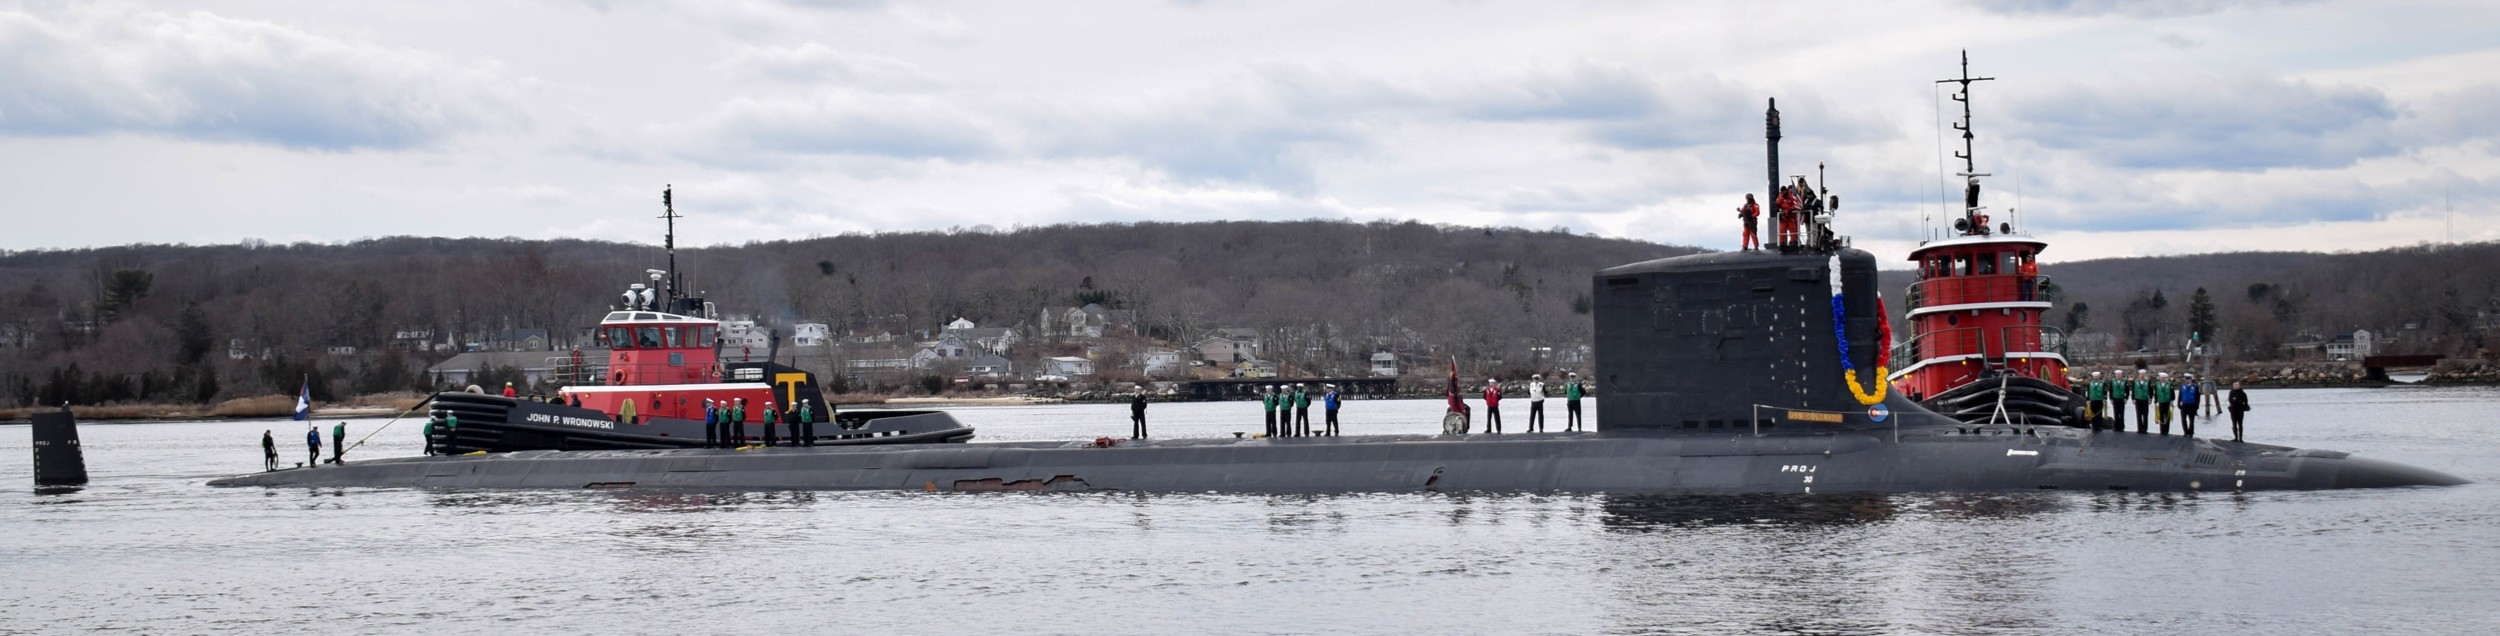 ssn-788 uss colorado virginia class attack submarine us navy 28